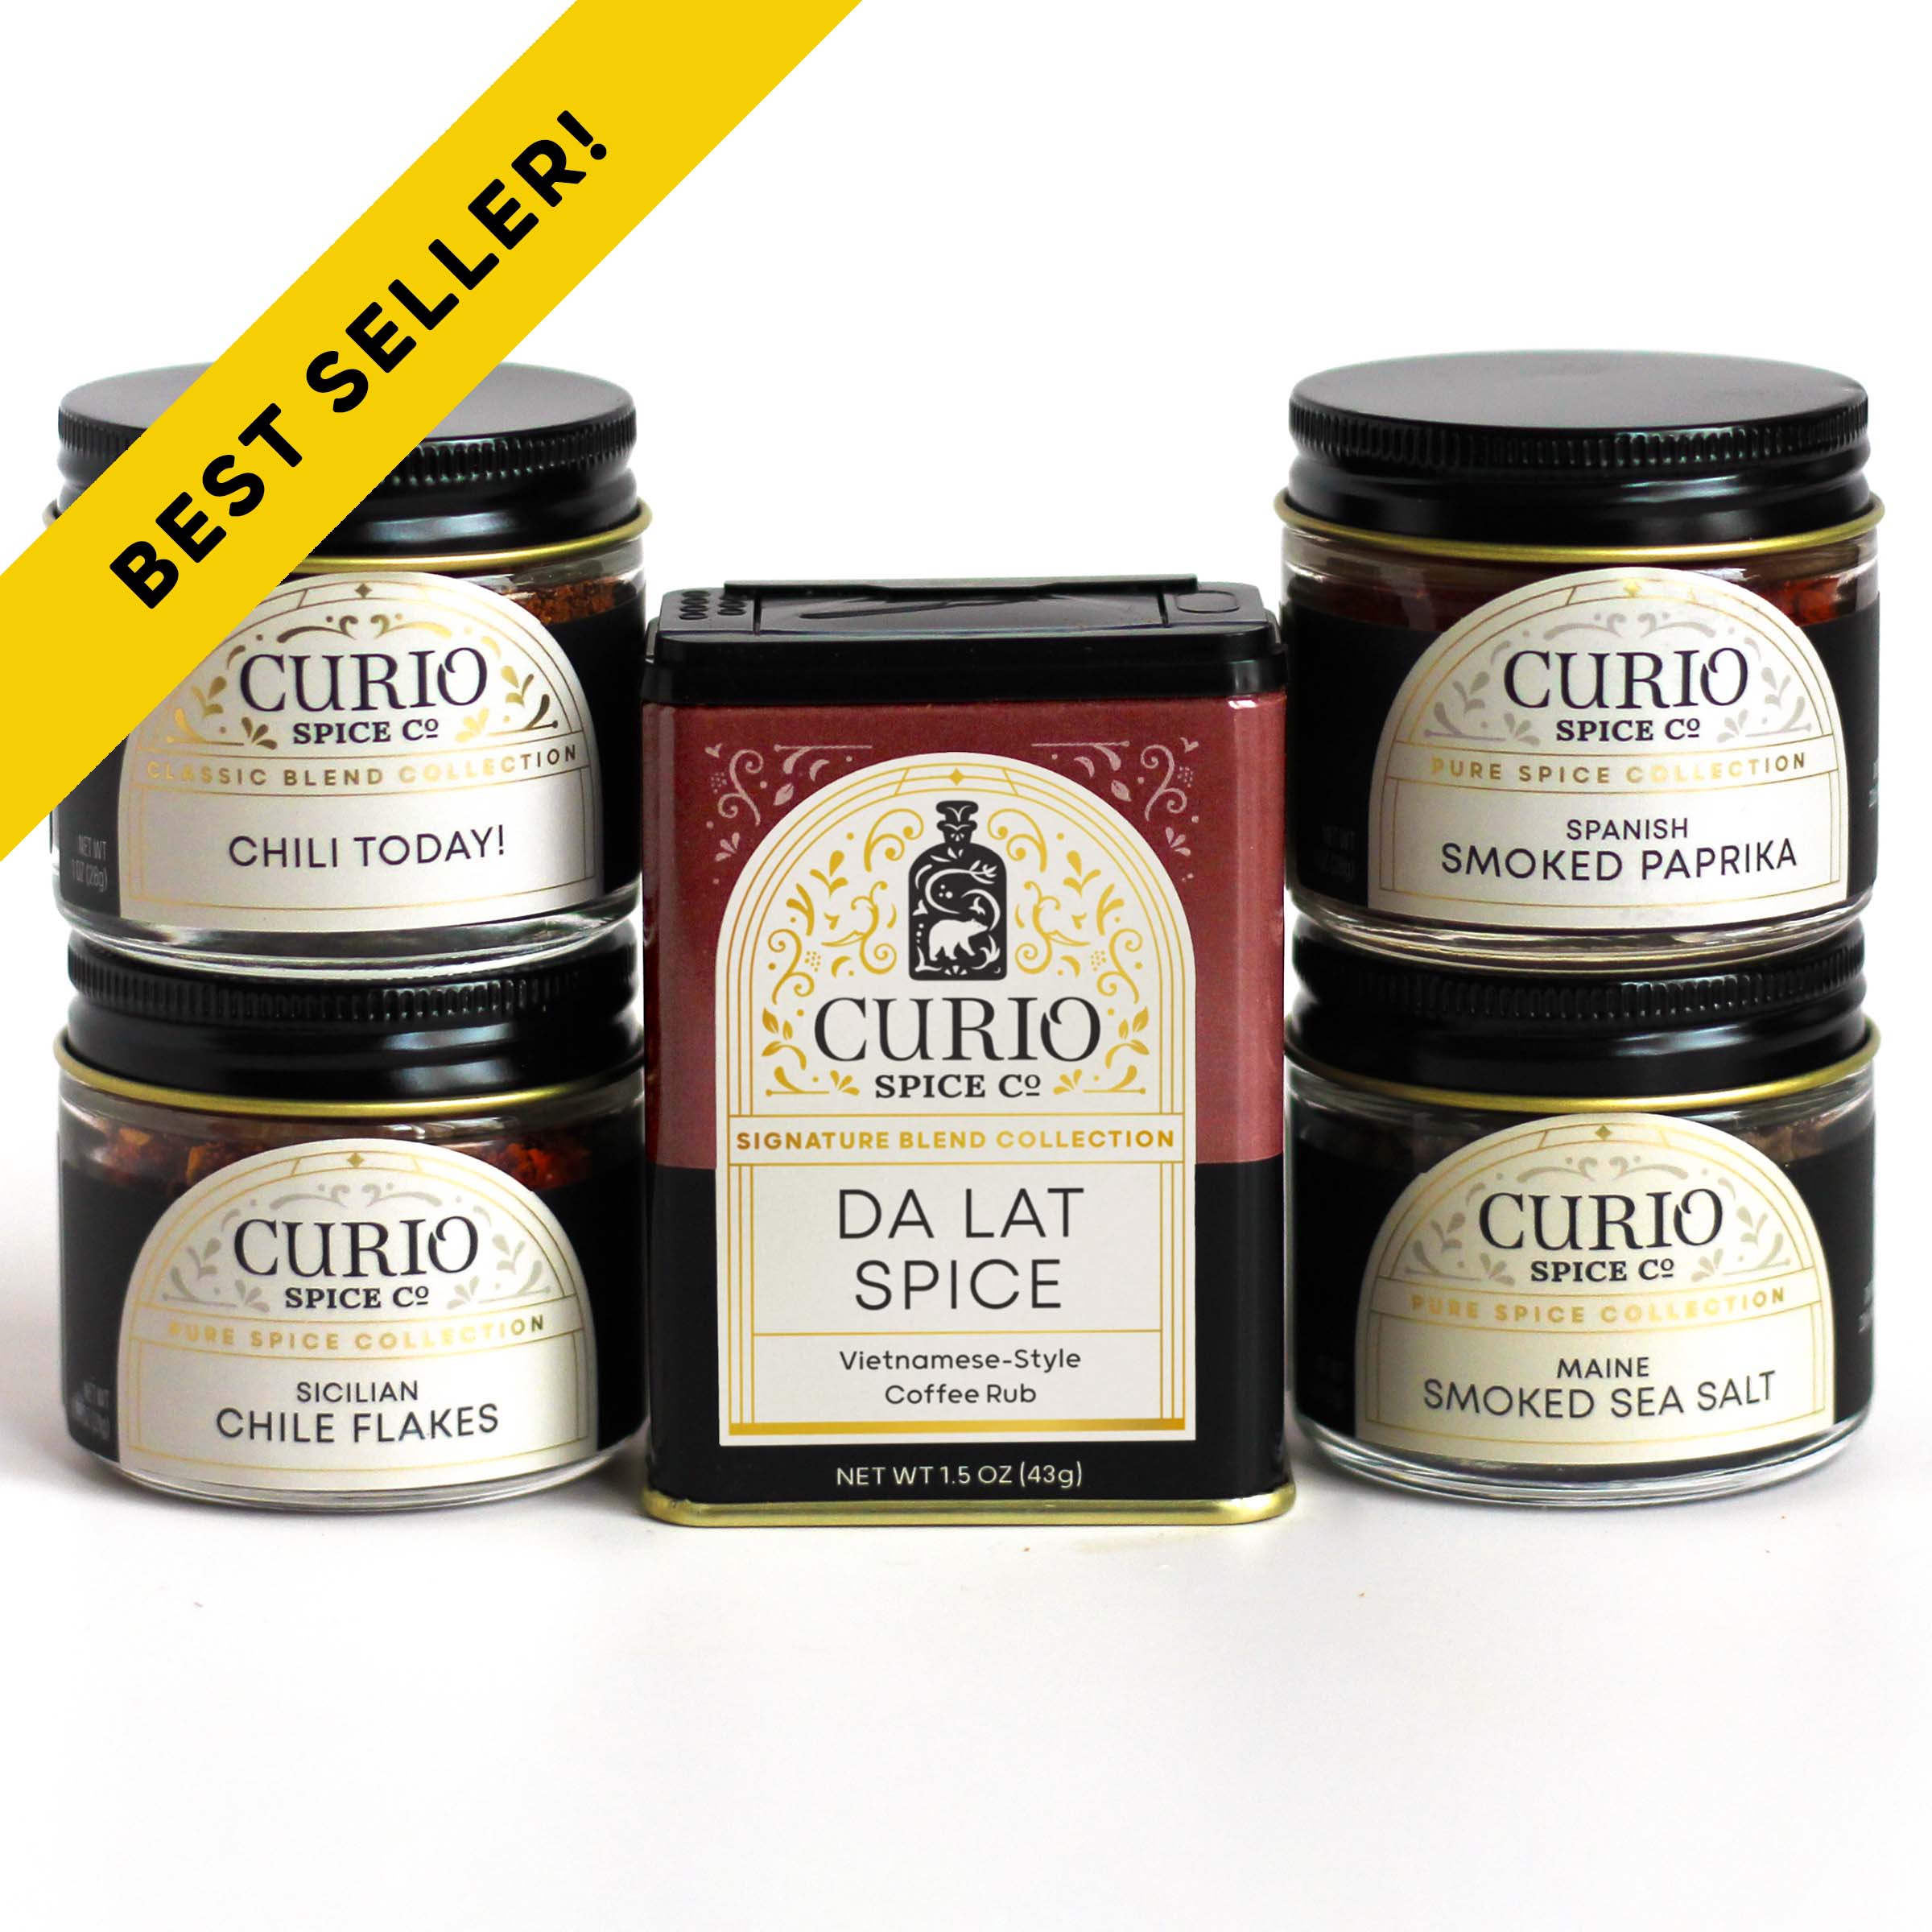 Curio Spice Co. Pickling Kit